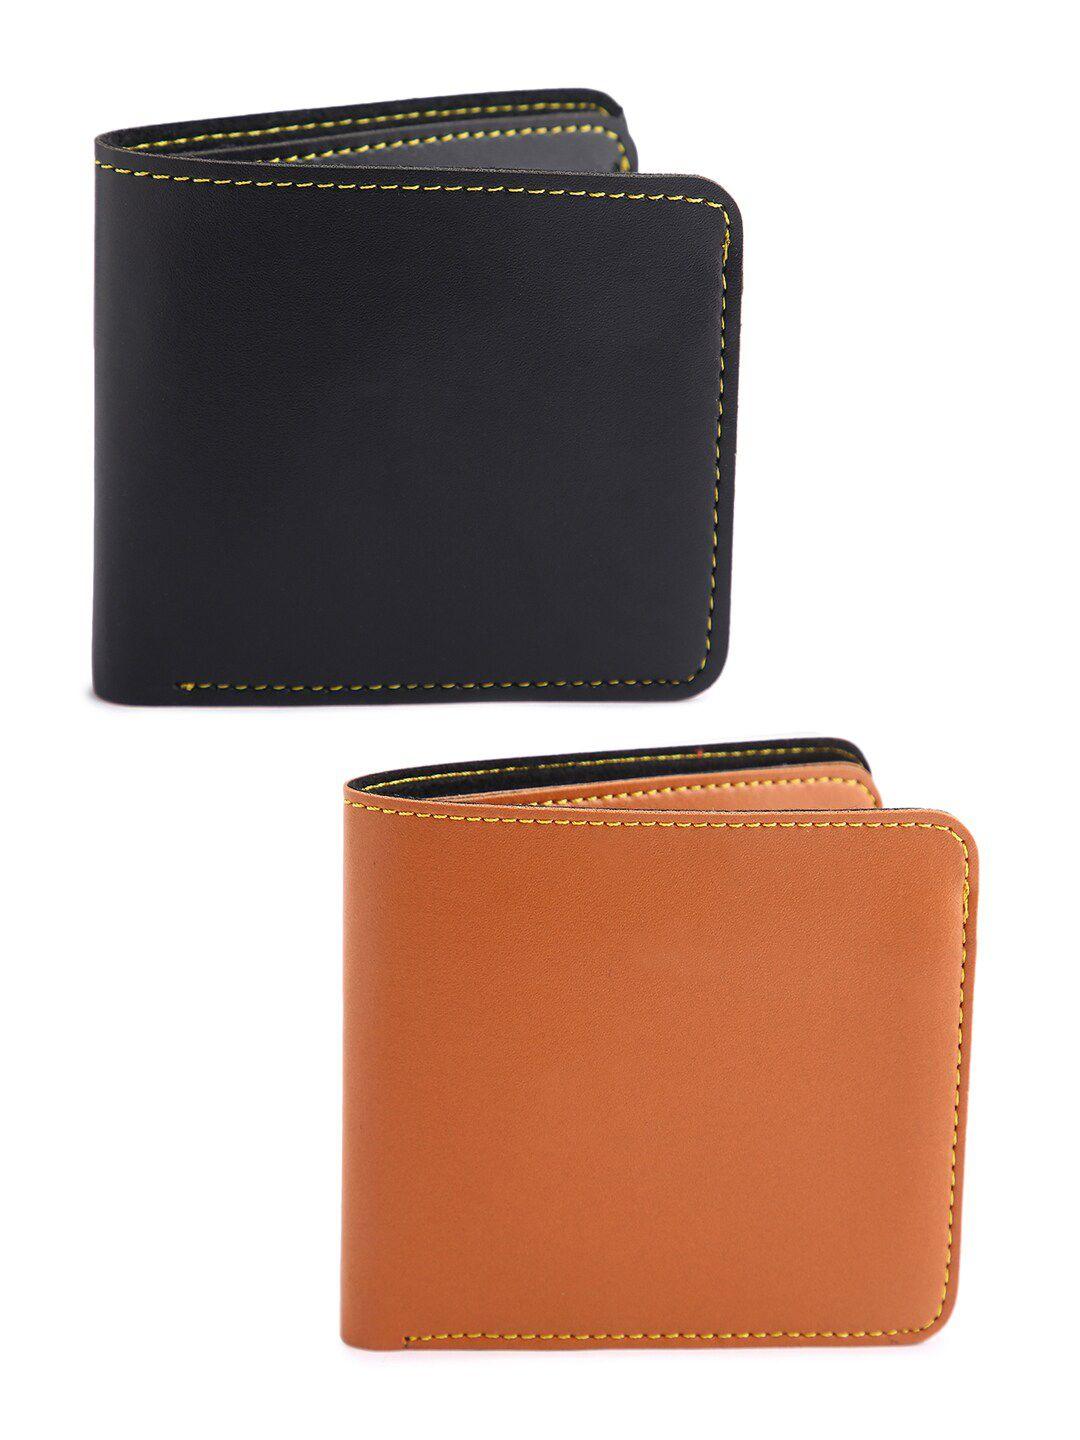 crusset set of 2 men black & tan two fold wallet